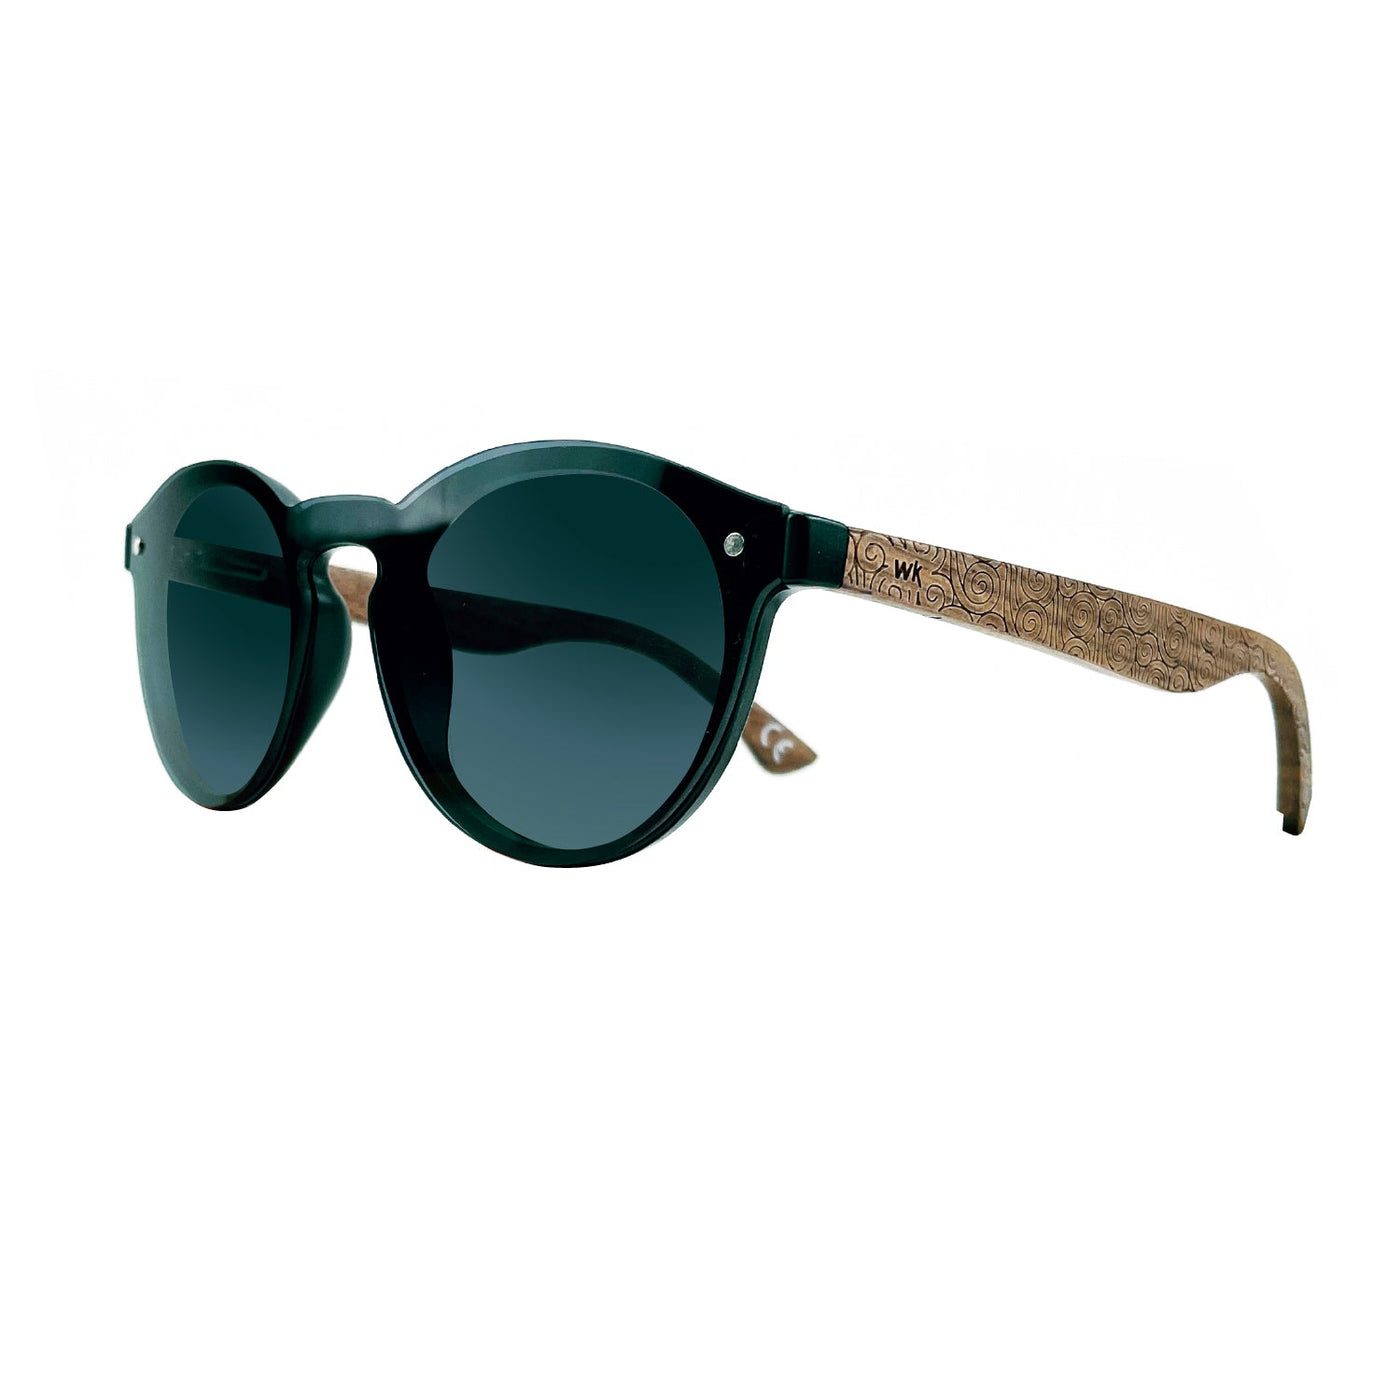 Wood Sunglasses for Men and Women - Koru